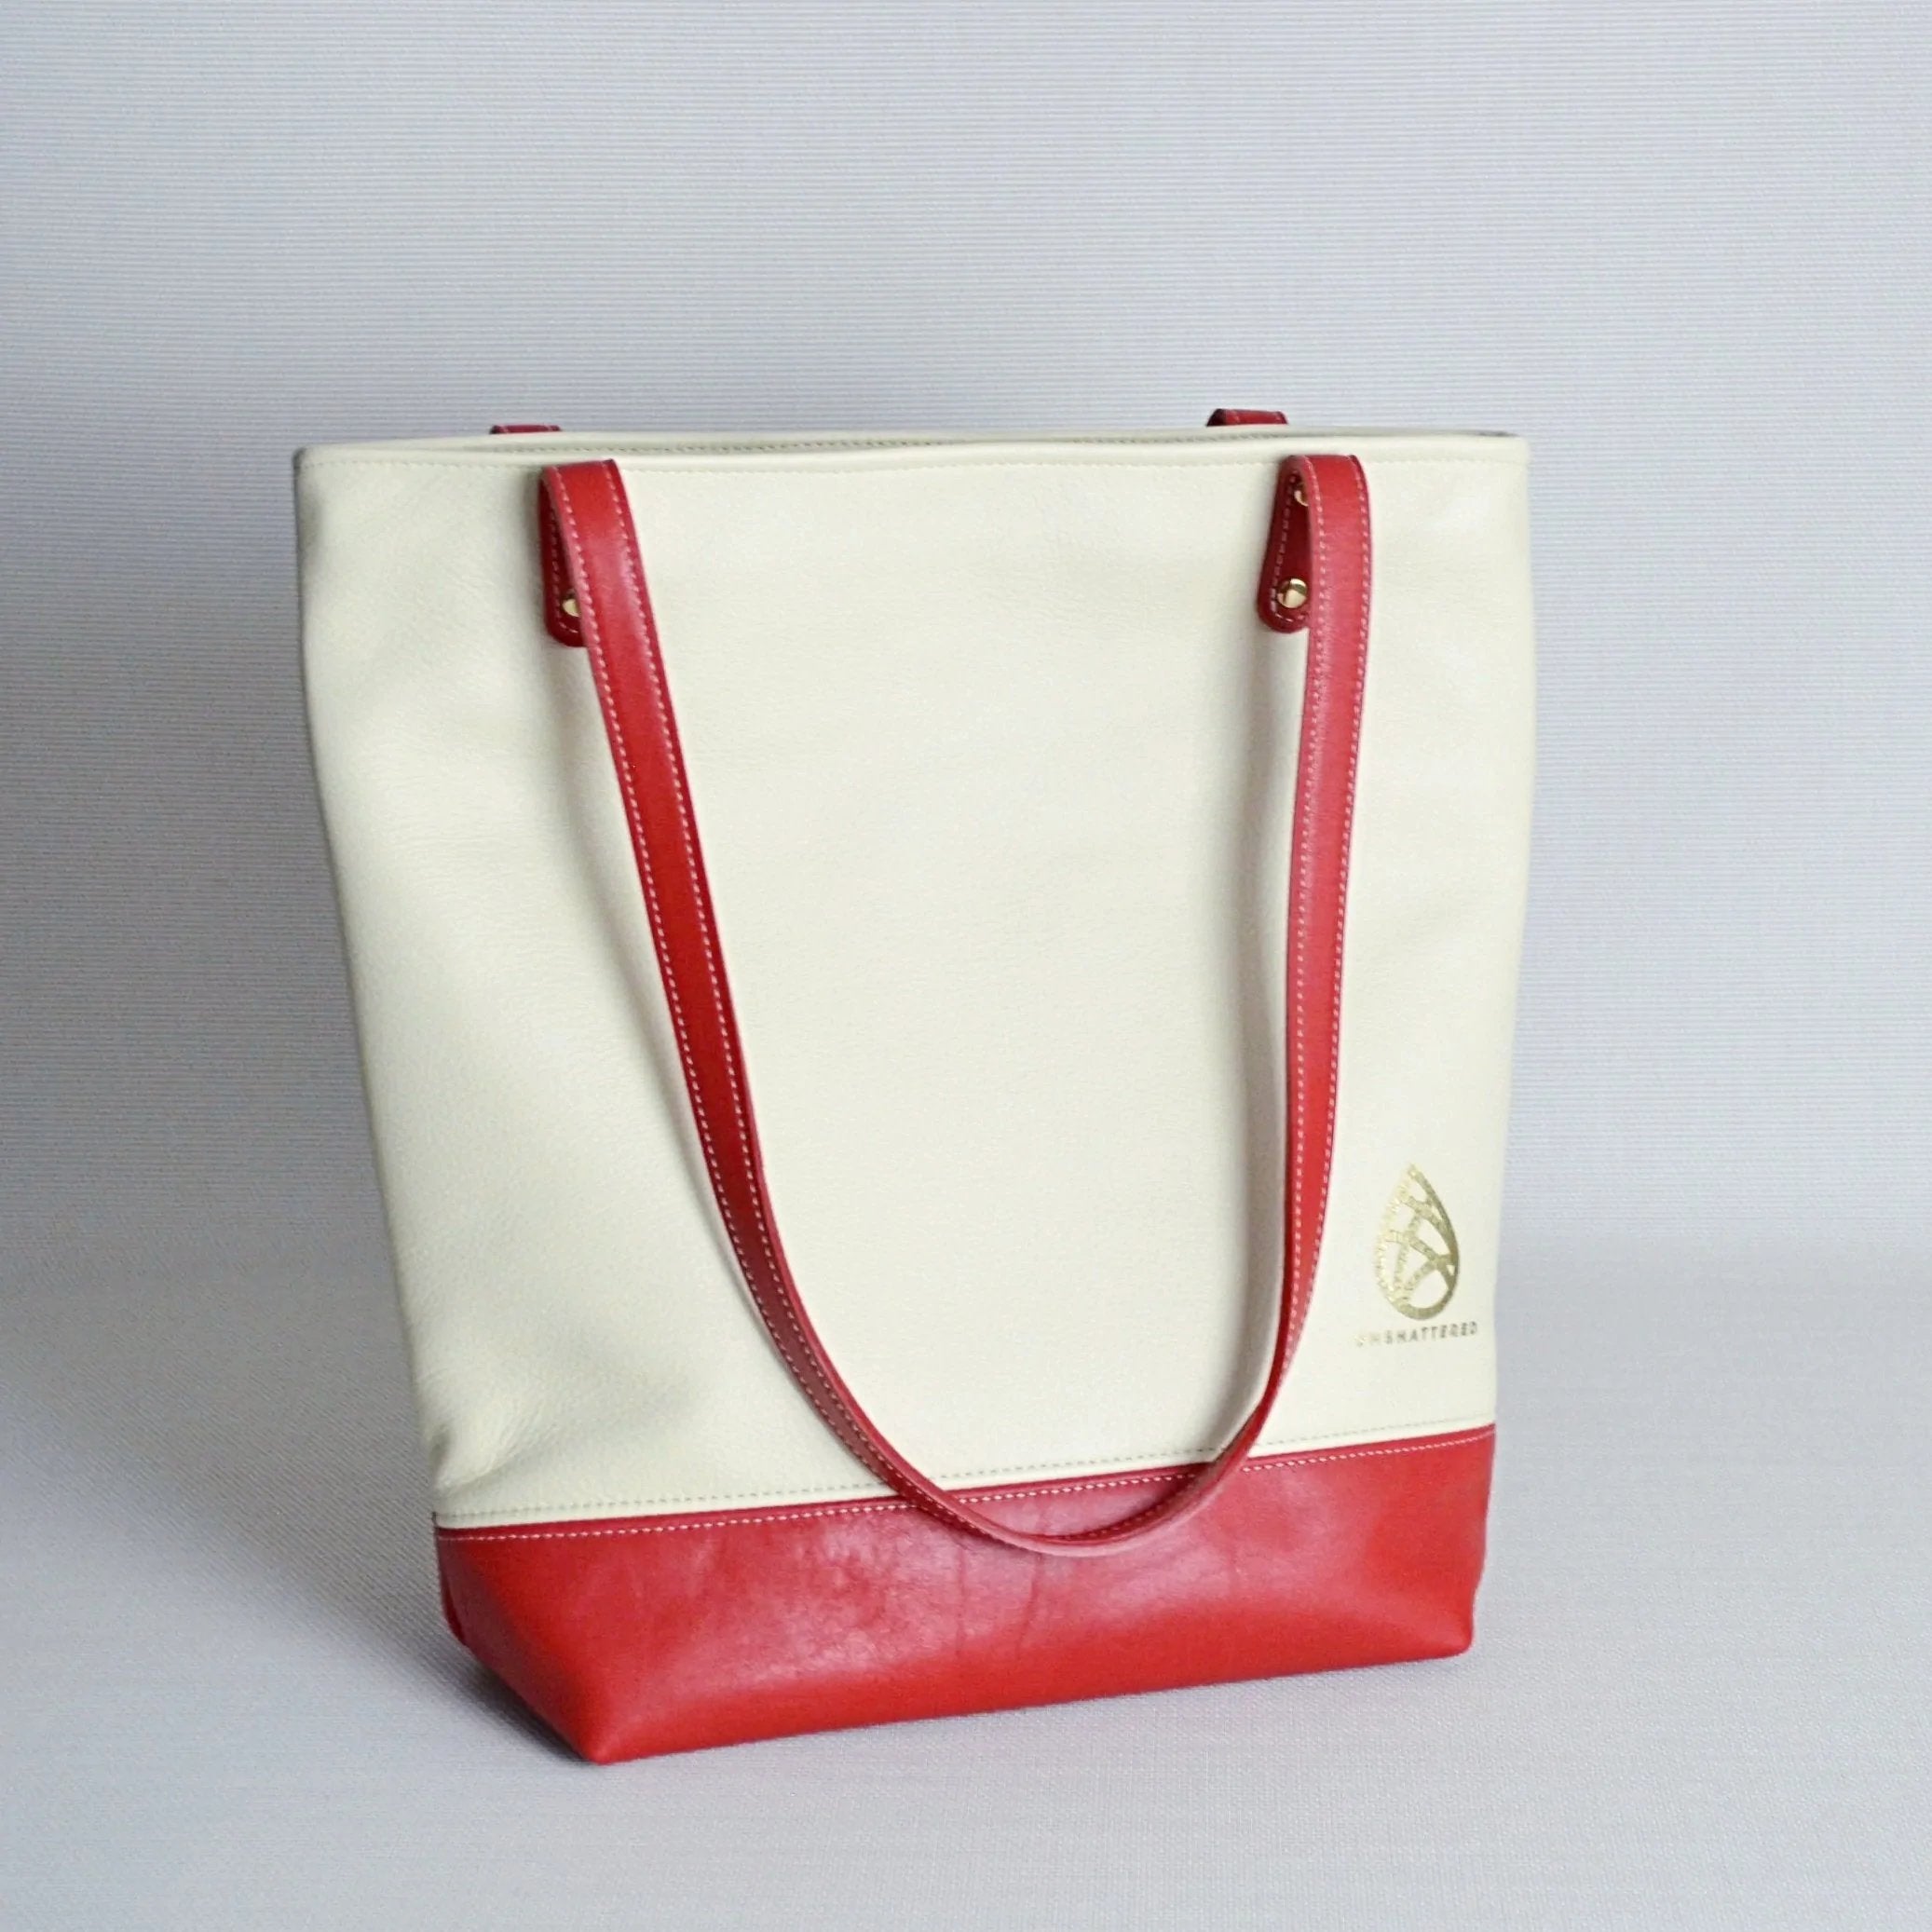 Polyester Drawstring Bags Bulk Packs - Cinch Bags Wholesale Bags LOT OF 24  48 50 | eBay